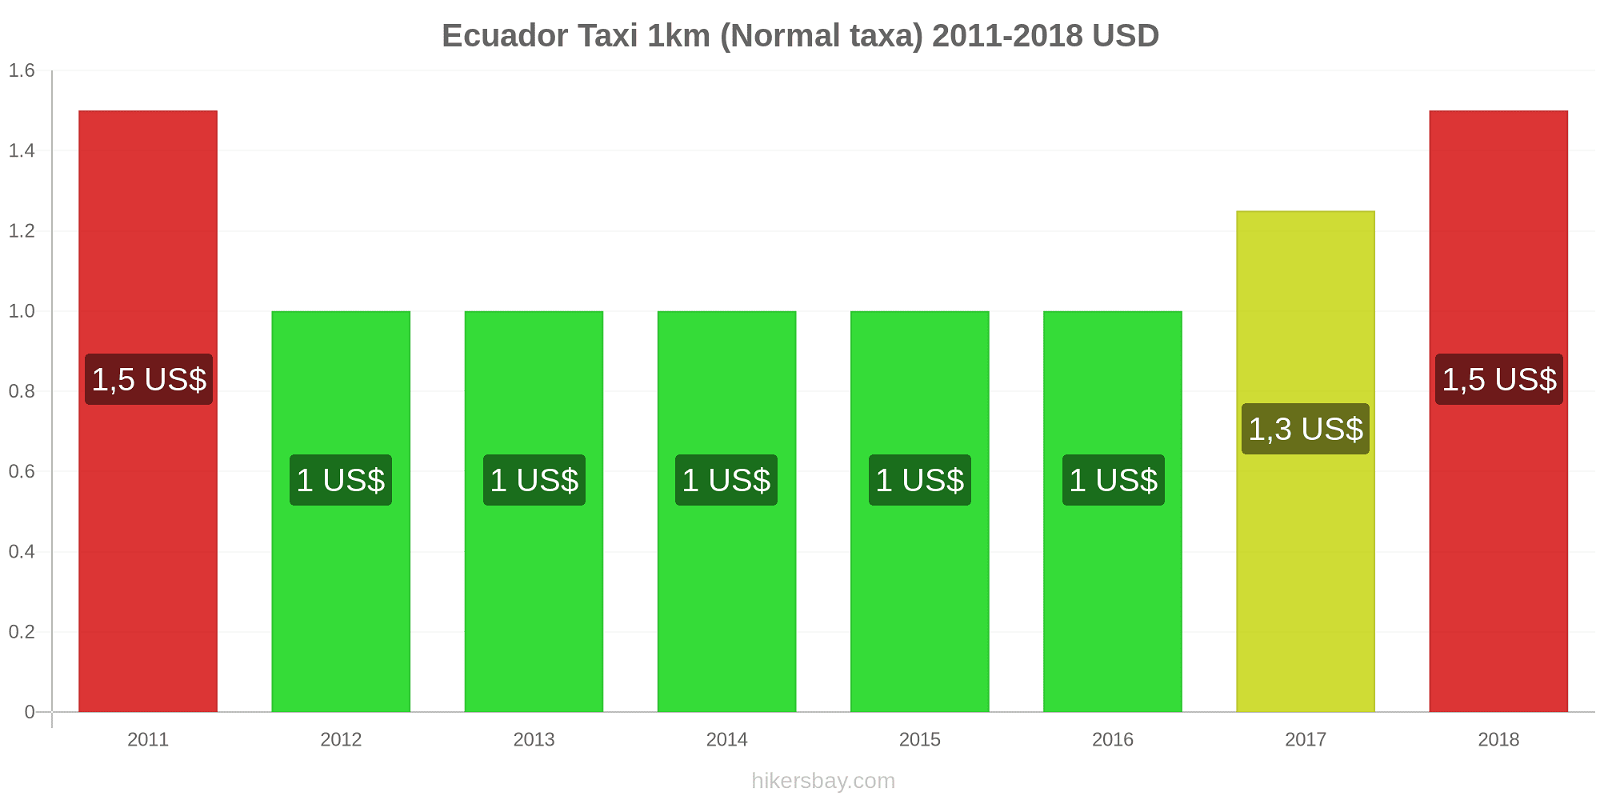 Ecuador prisändringar Taxi 1km (Normal taxa) hikersbay.com